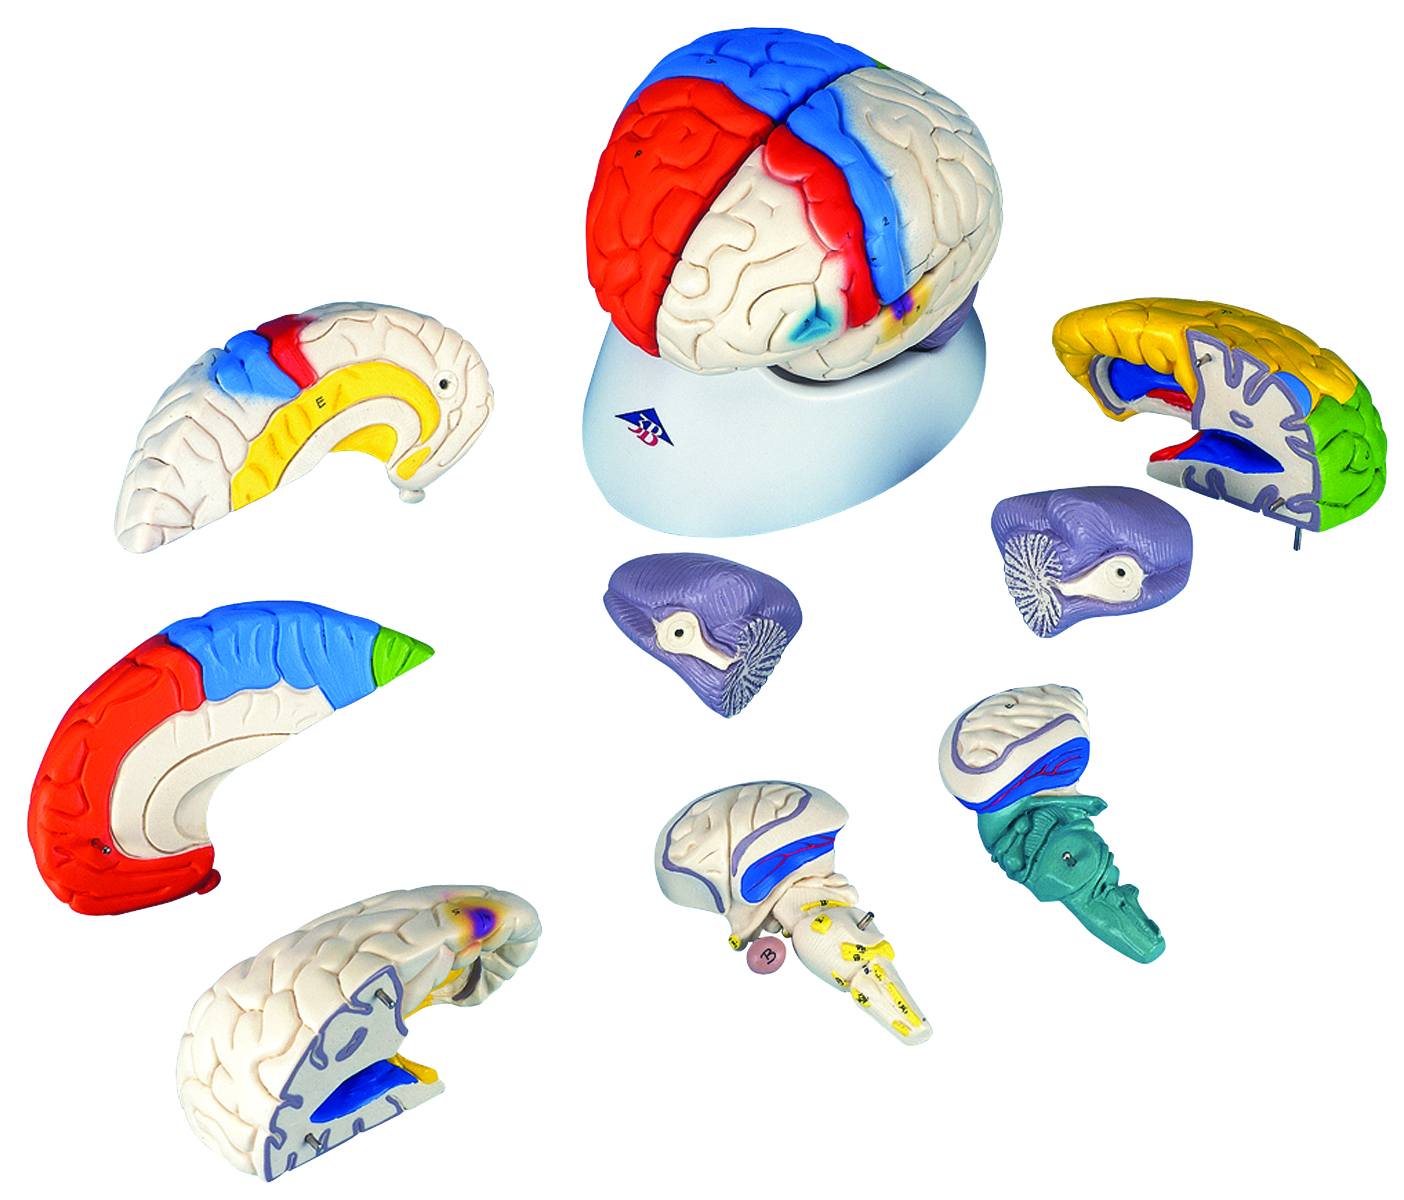 Human Brain Model | ProHealthcareProducts